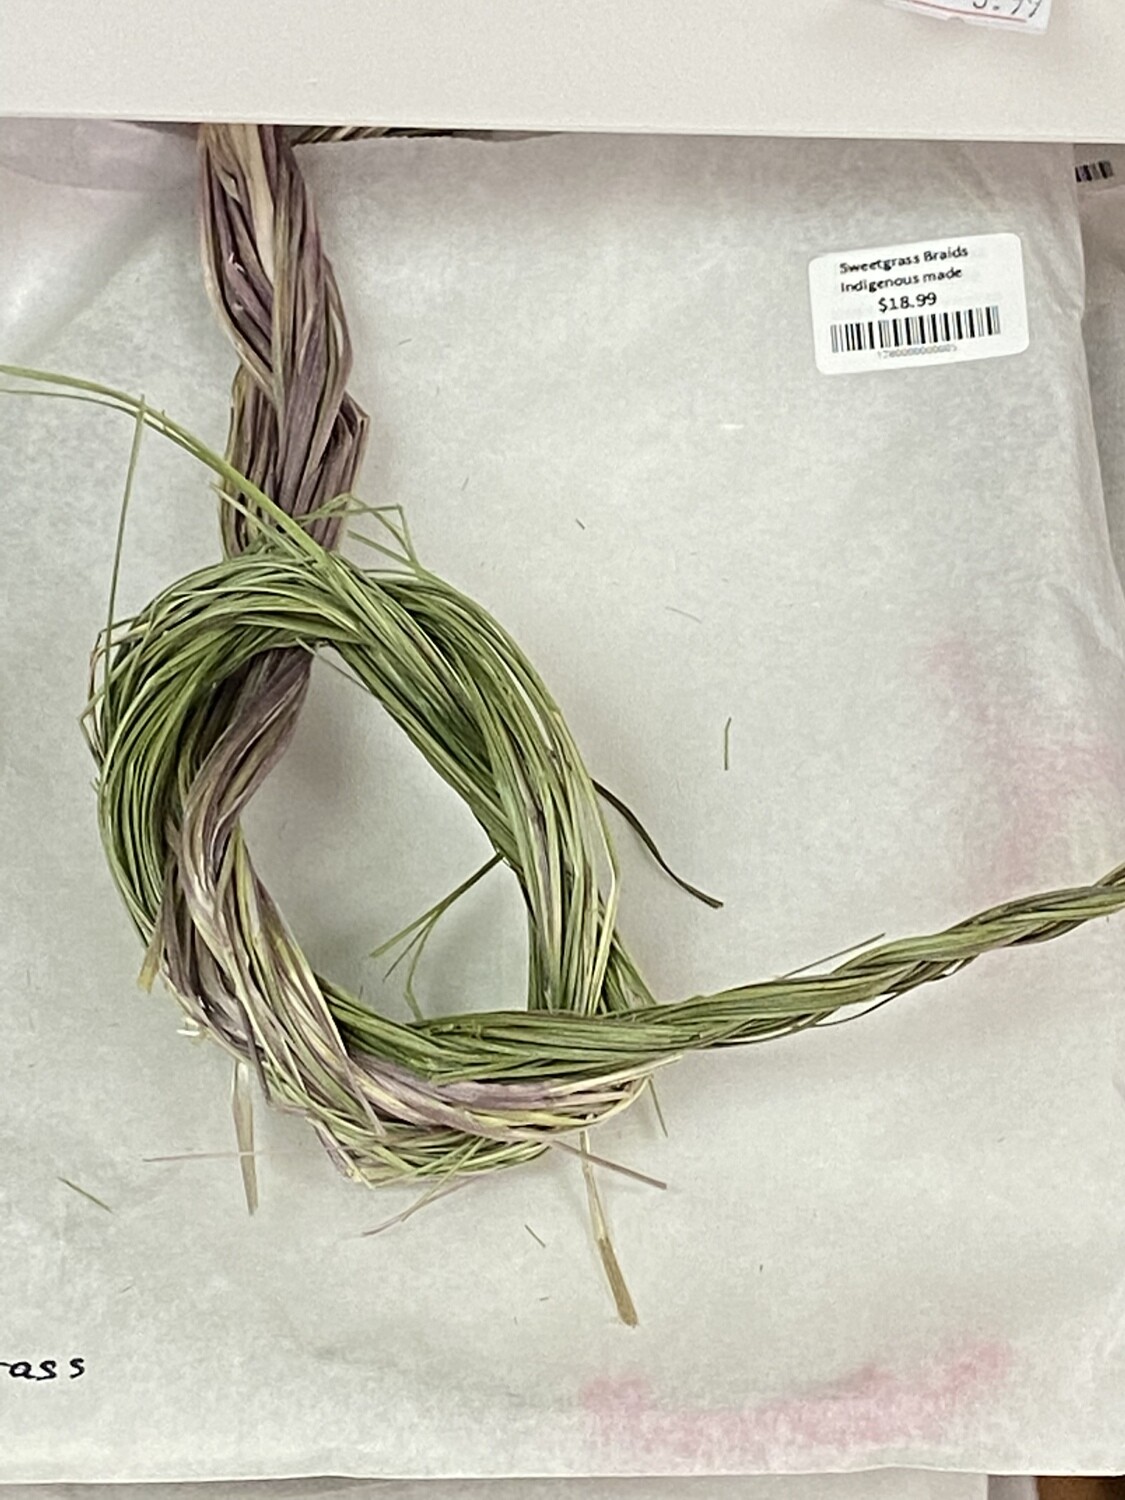 Sweetgrass Braid Indigenous Made